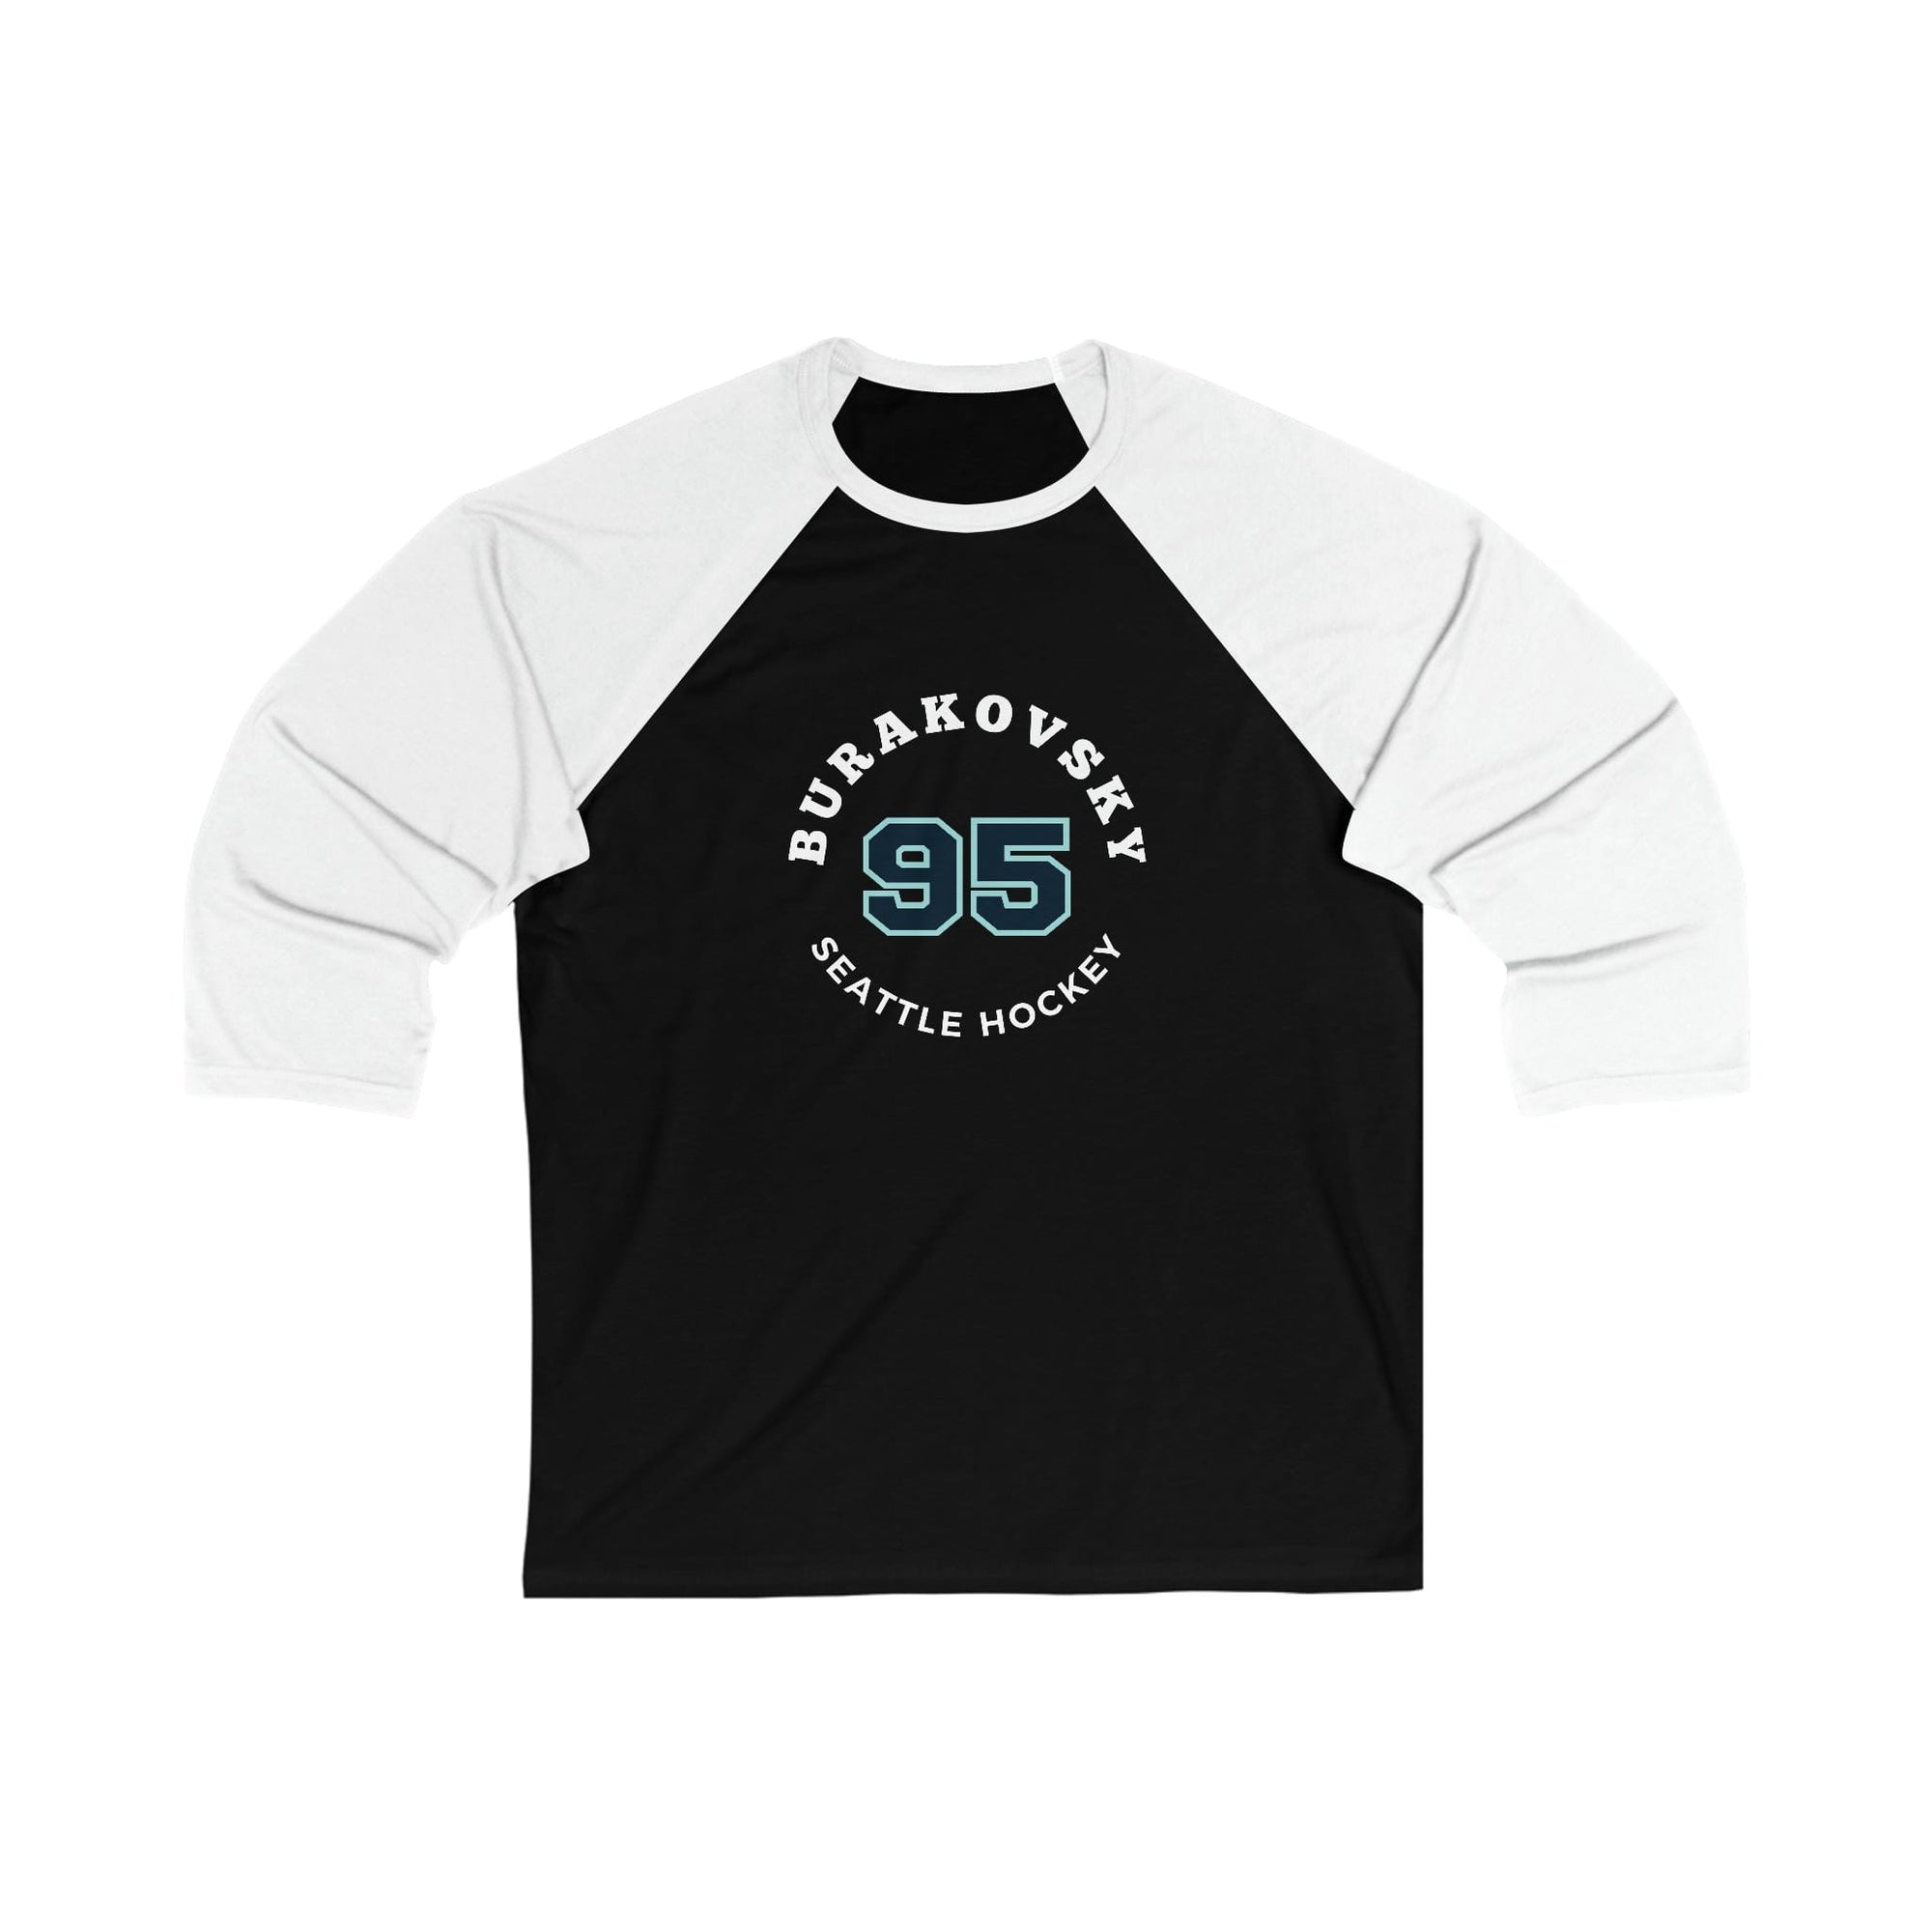 Long-sleeve Burakovsky 95 Seattle Hockey Number Arch Design Unisex Tri-Blend 3/4 Sleeve Raglan Baseball Shirt